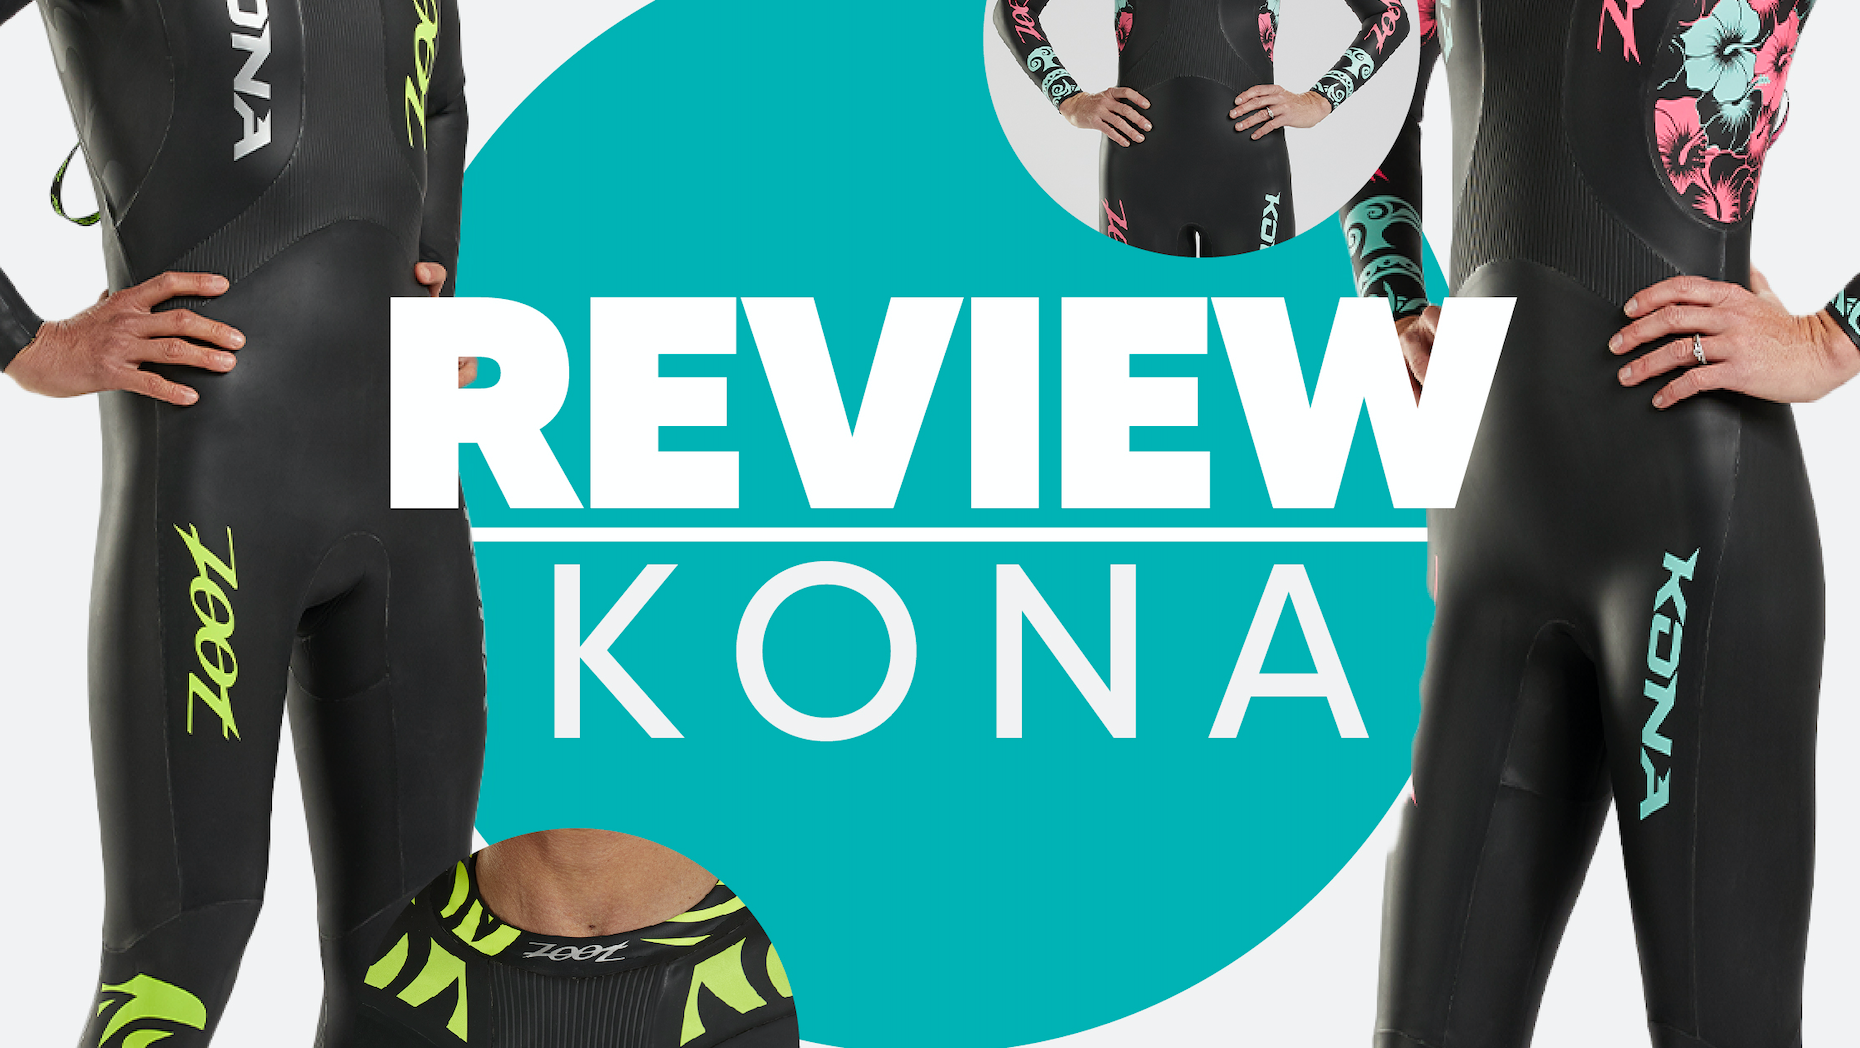 Review del nuevo Wetsuit Kona